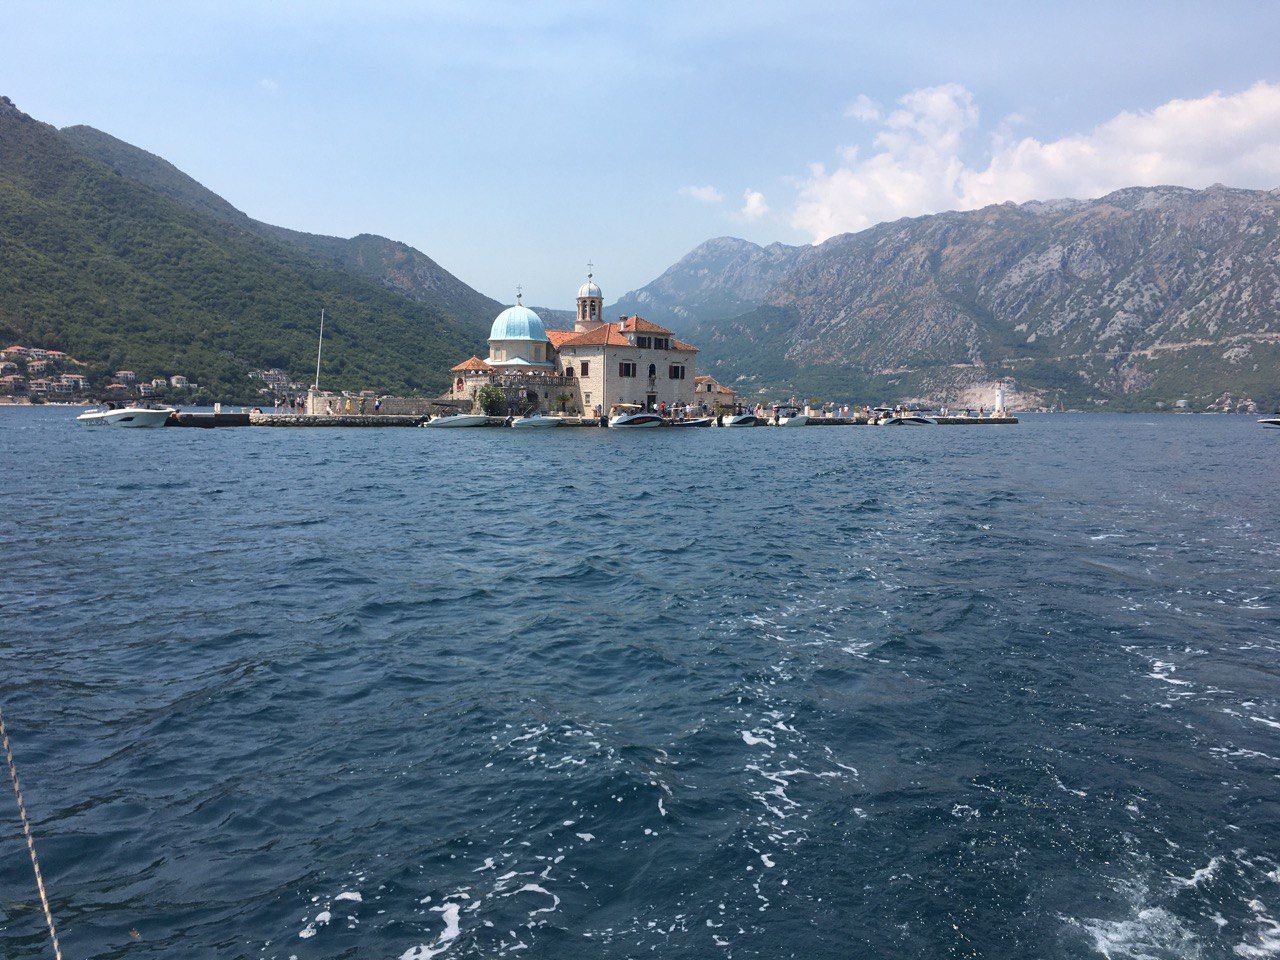 Motor boat trips along the Bay of Kotor